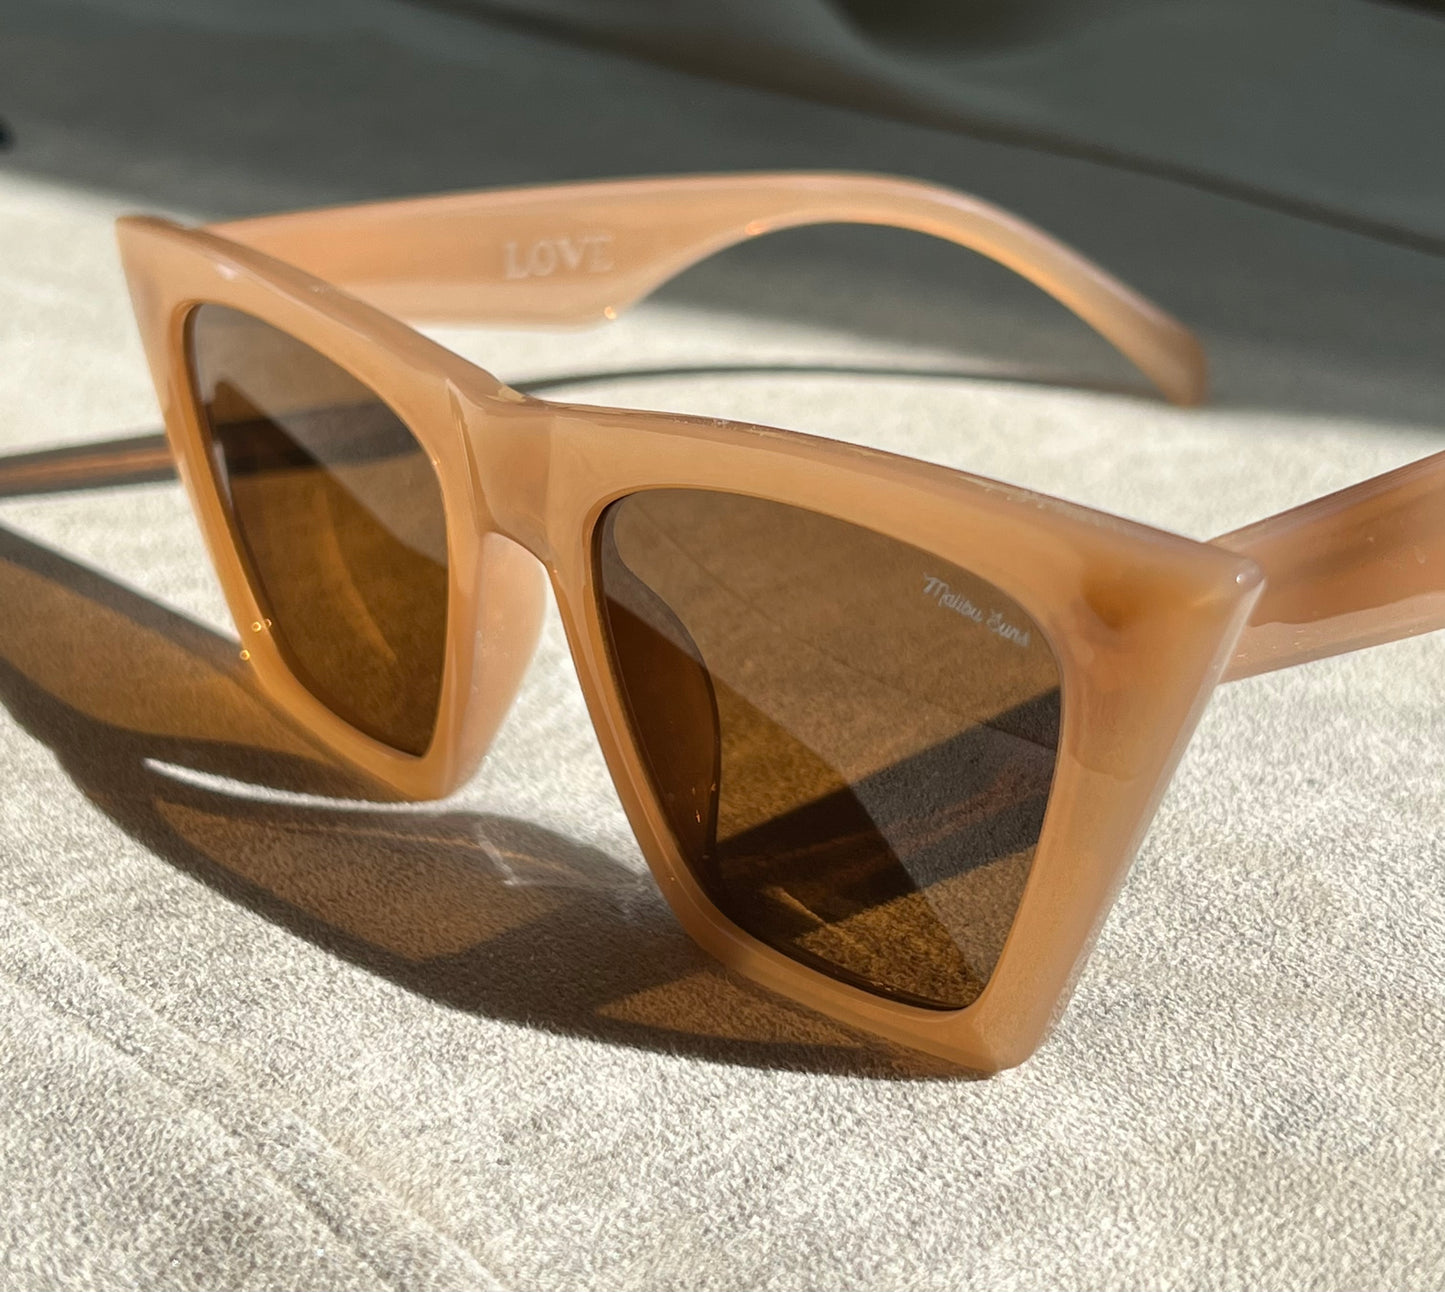 Malibu Suns® Tiger Eyez! UV protection, easy ALL-day wear!